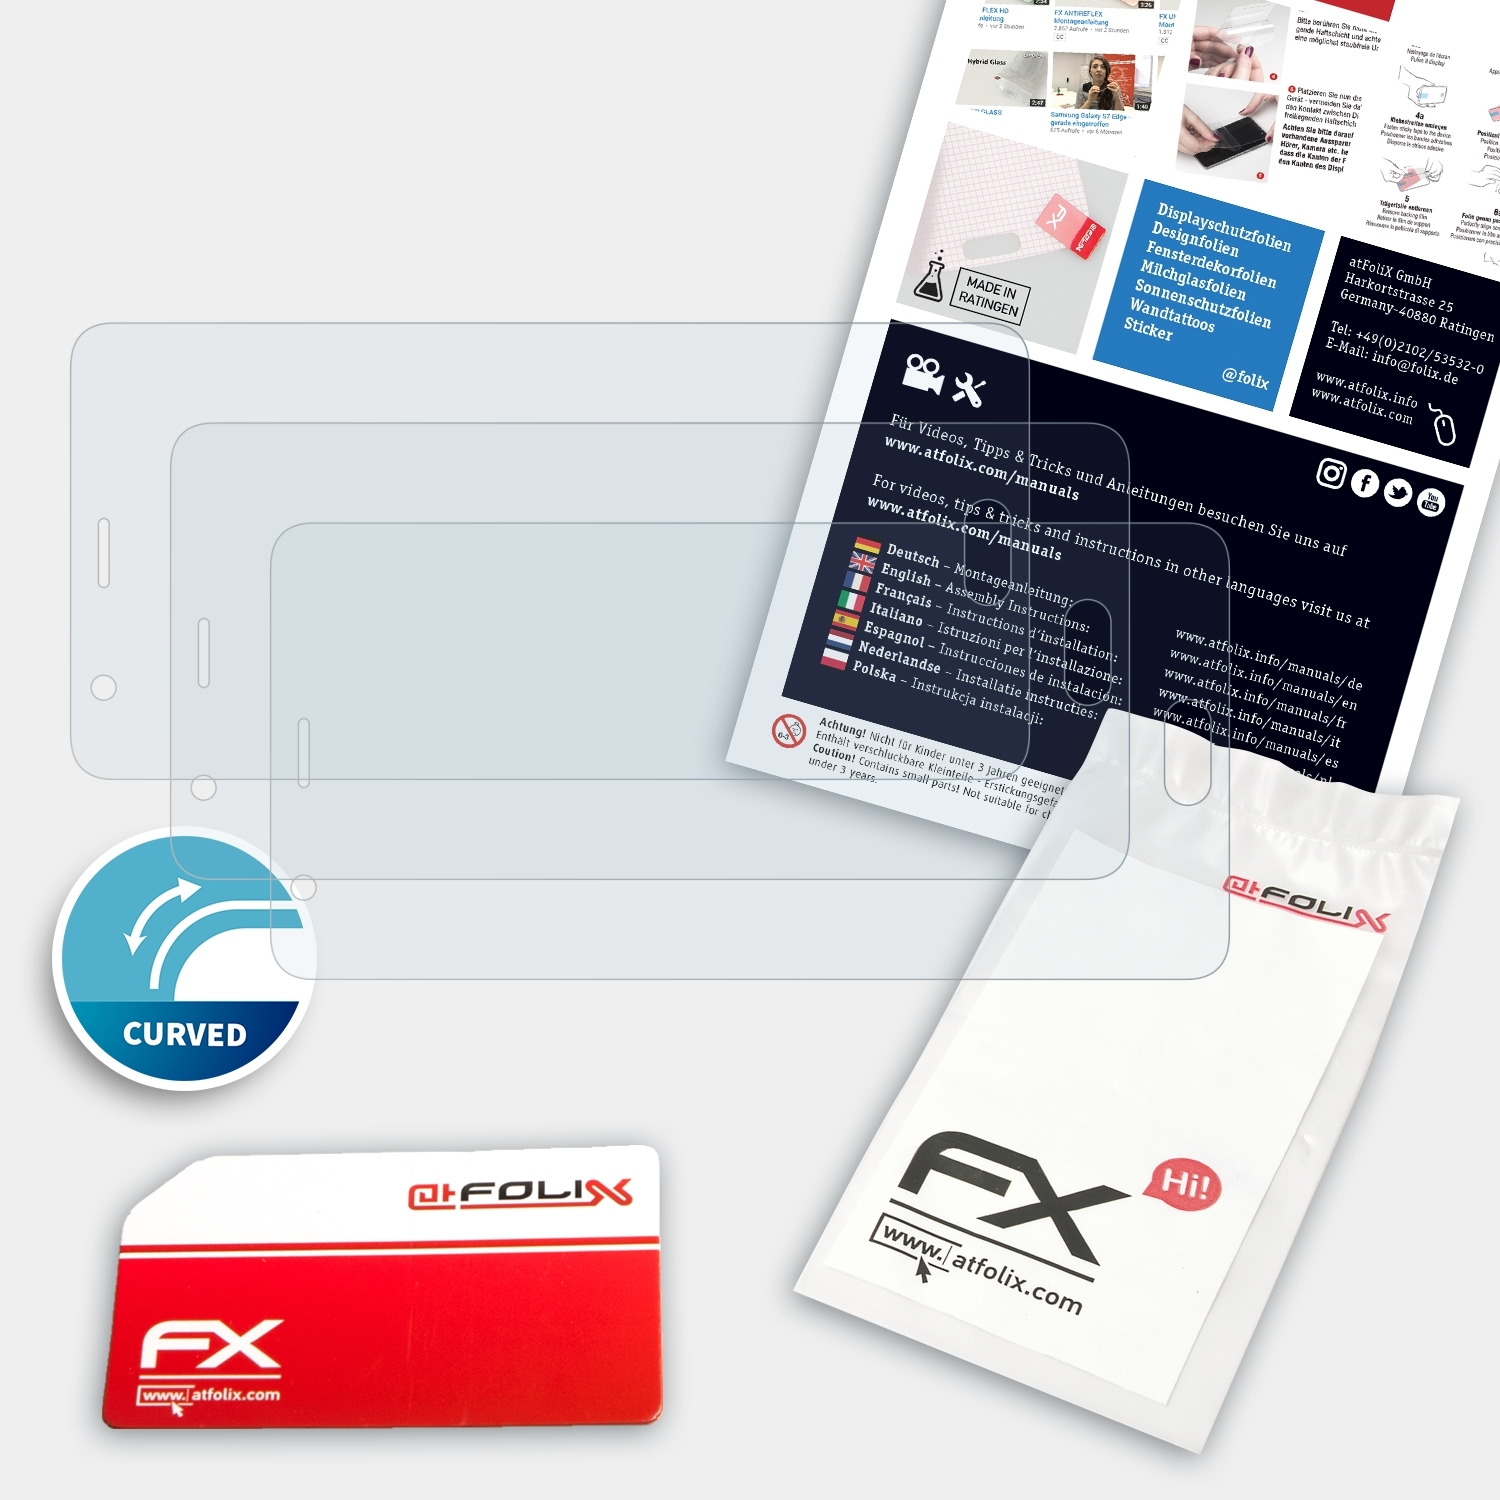 ATFOLIX 3x FX-ActiFleX Displayschutz(für Note Pro) 4 Infinix